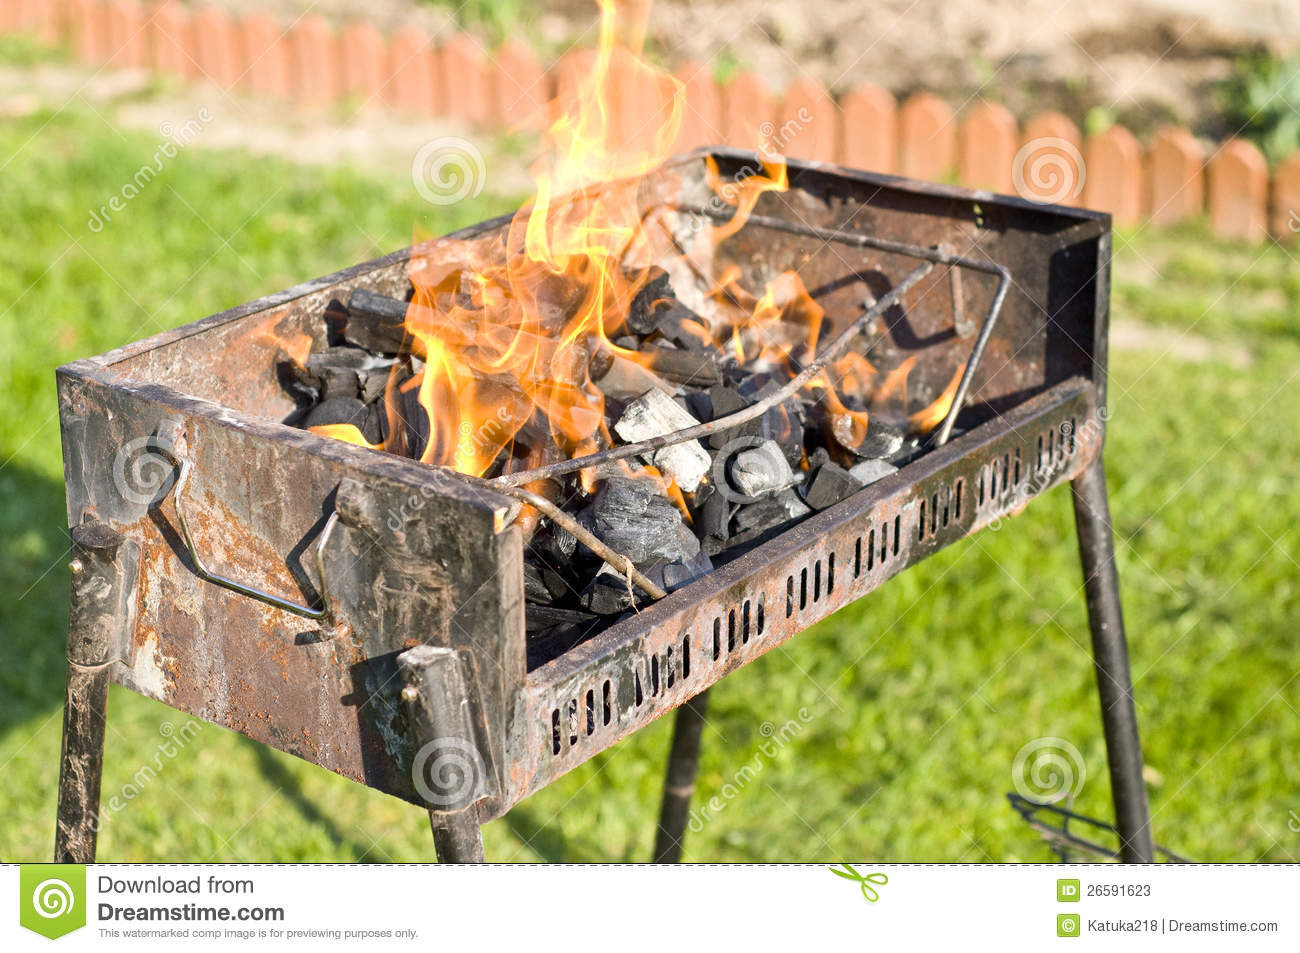 Backyard Barbecue Grill
 Backyard barbecue grill stock image Image of back rusty